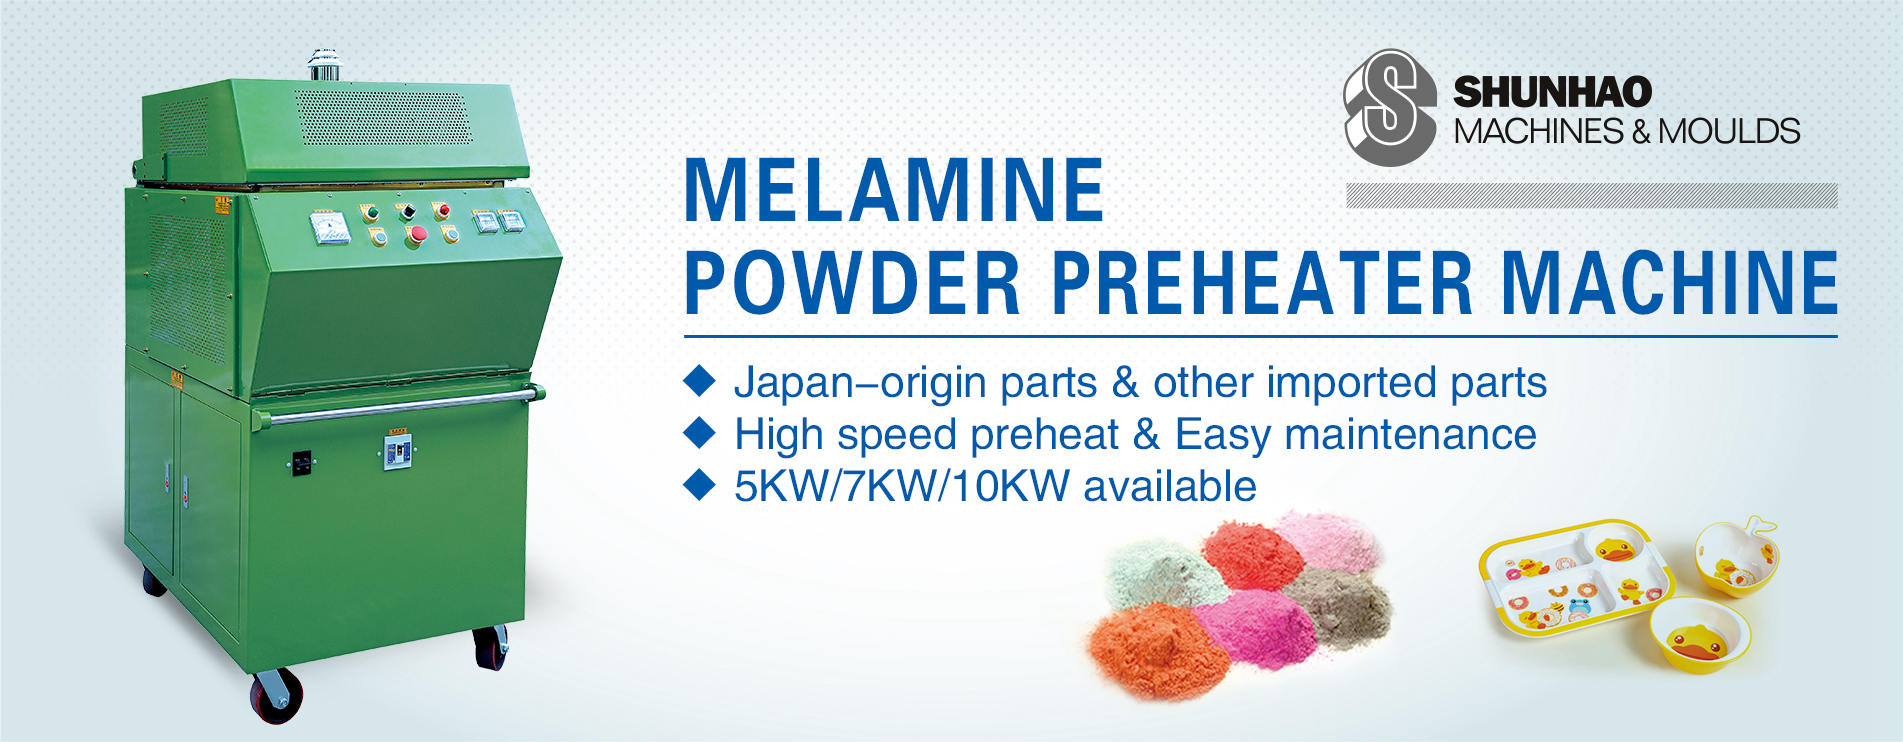 Melamine Powder Preheater Machine